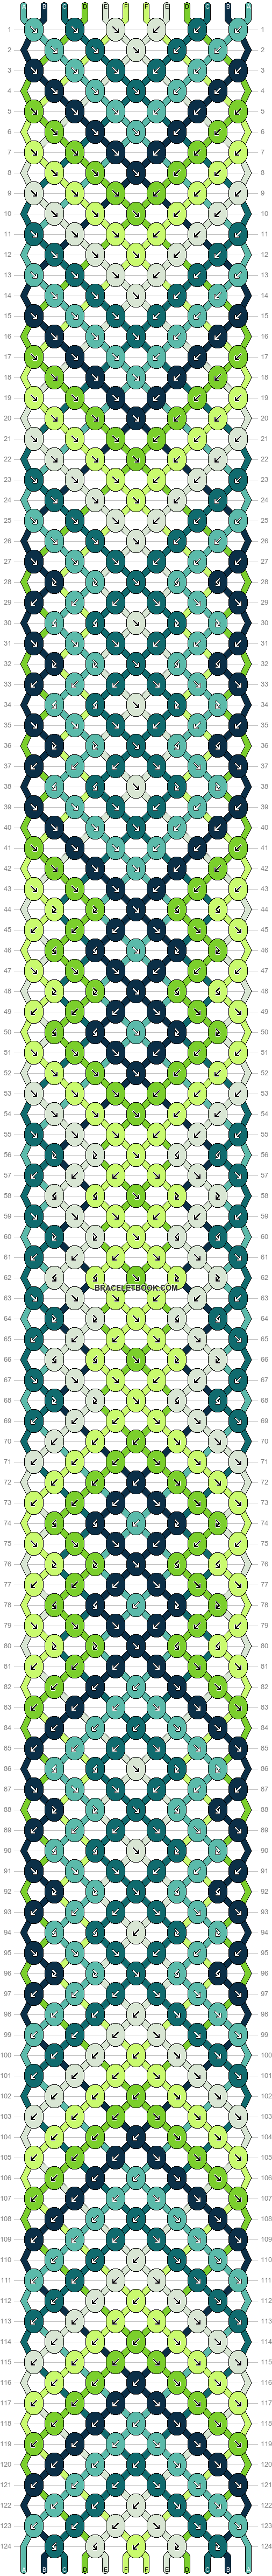 Advanced pattern charts : r/friendshipbracelets